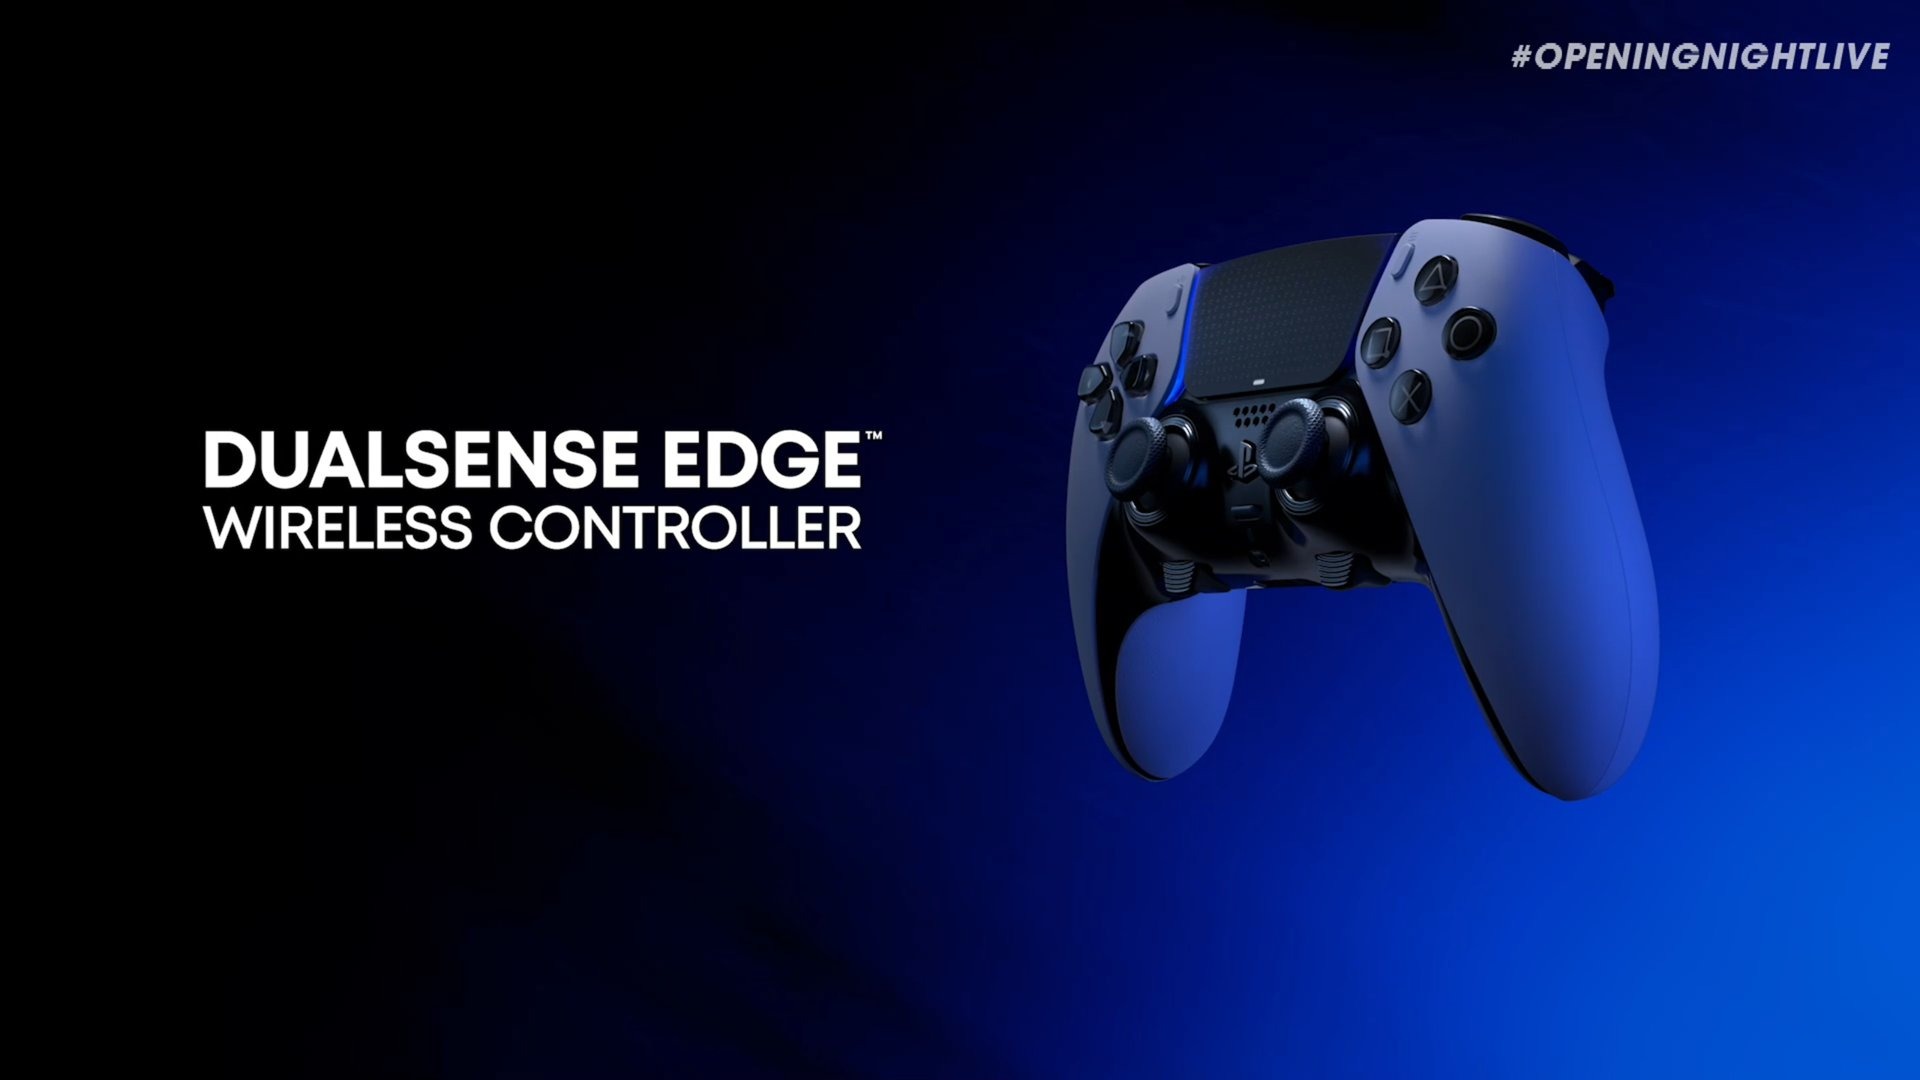 preordinare il controller PS5 DualSense Edge